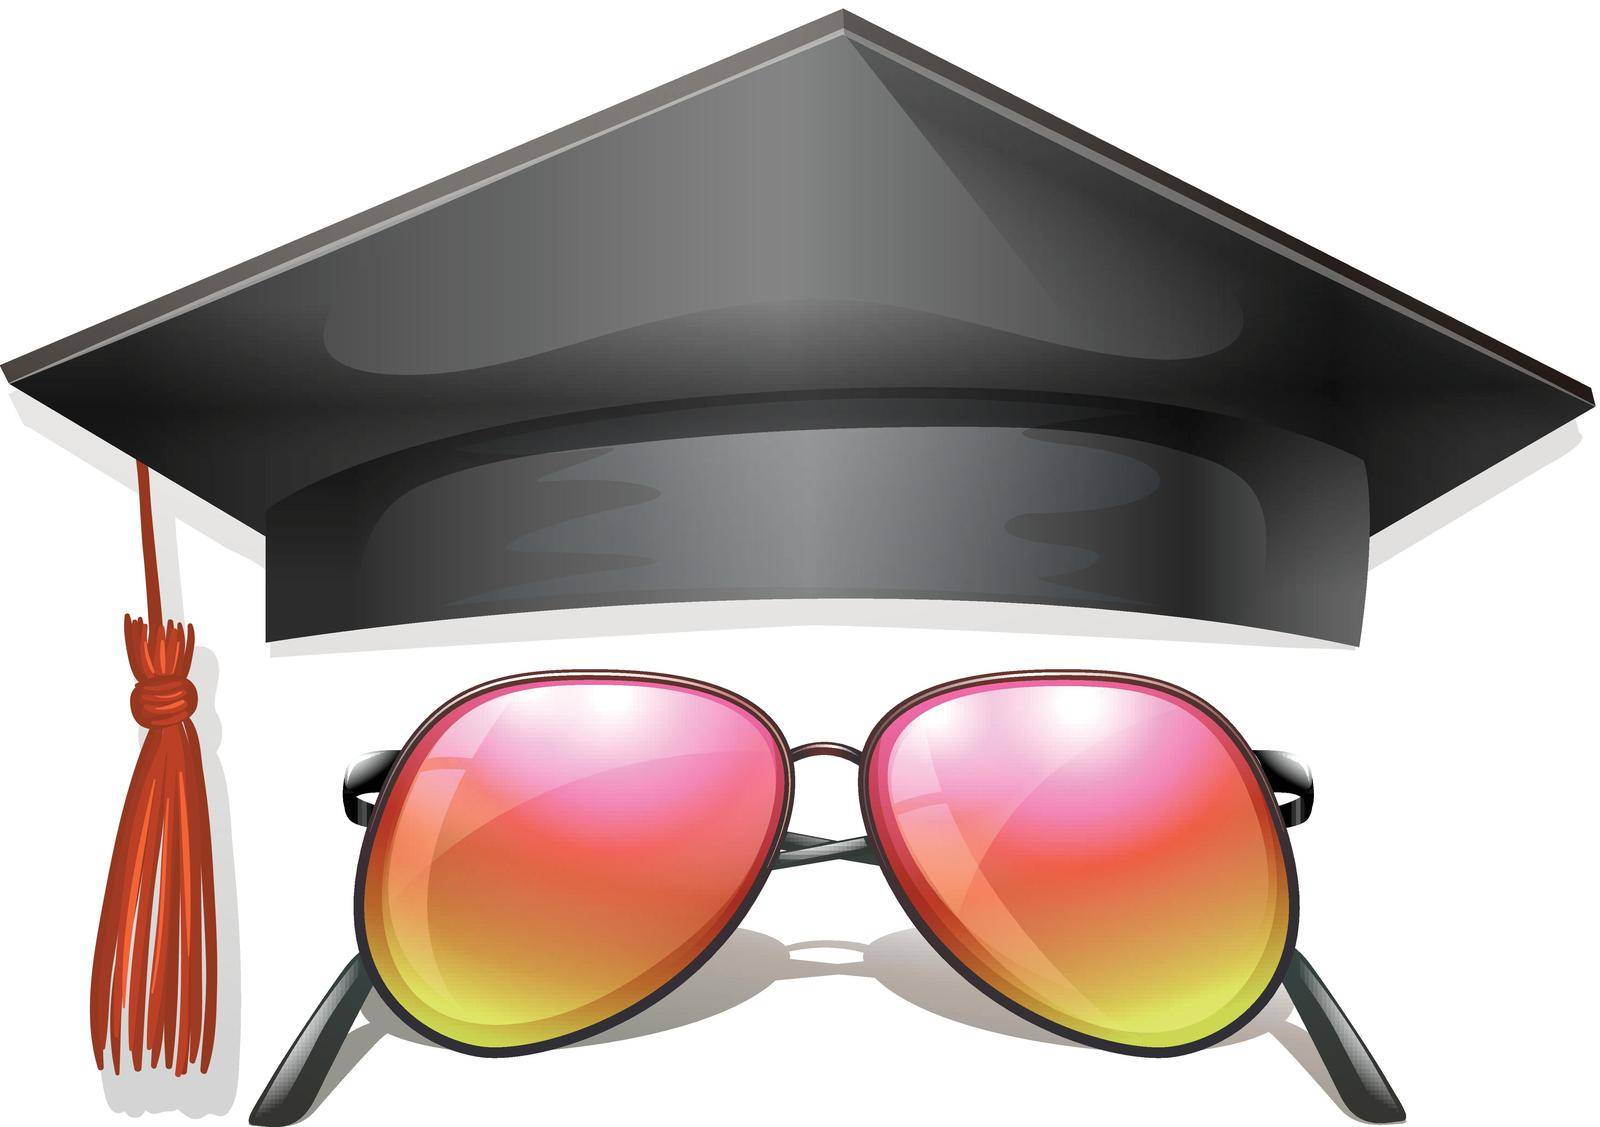 Graduation cap and sunglasses illustration